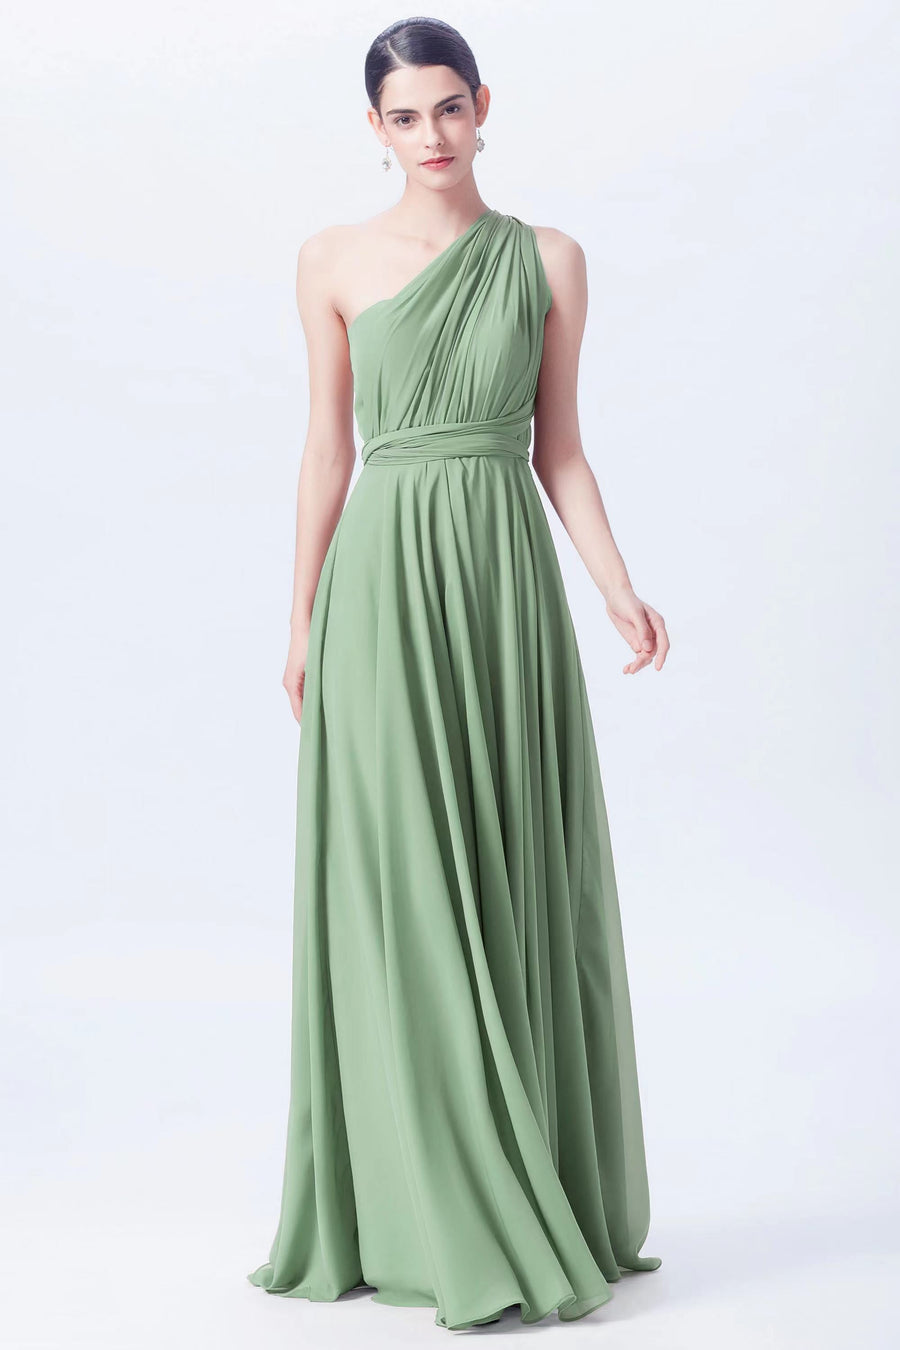 Lace Boat Neck Sleeveless Bridesmaid Dress| Plus Size | 60+ Colors